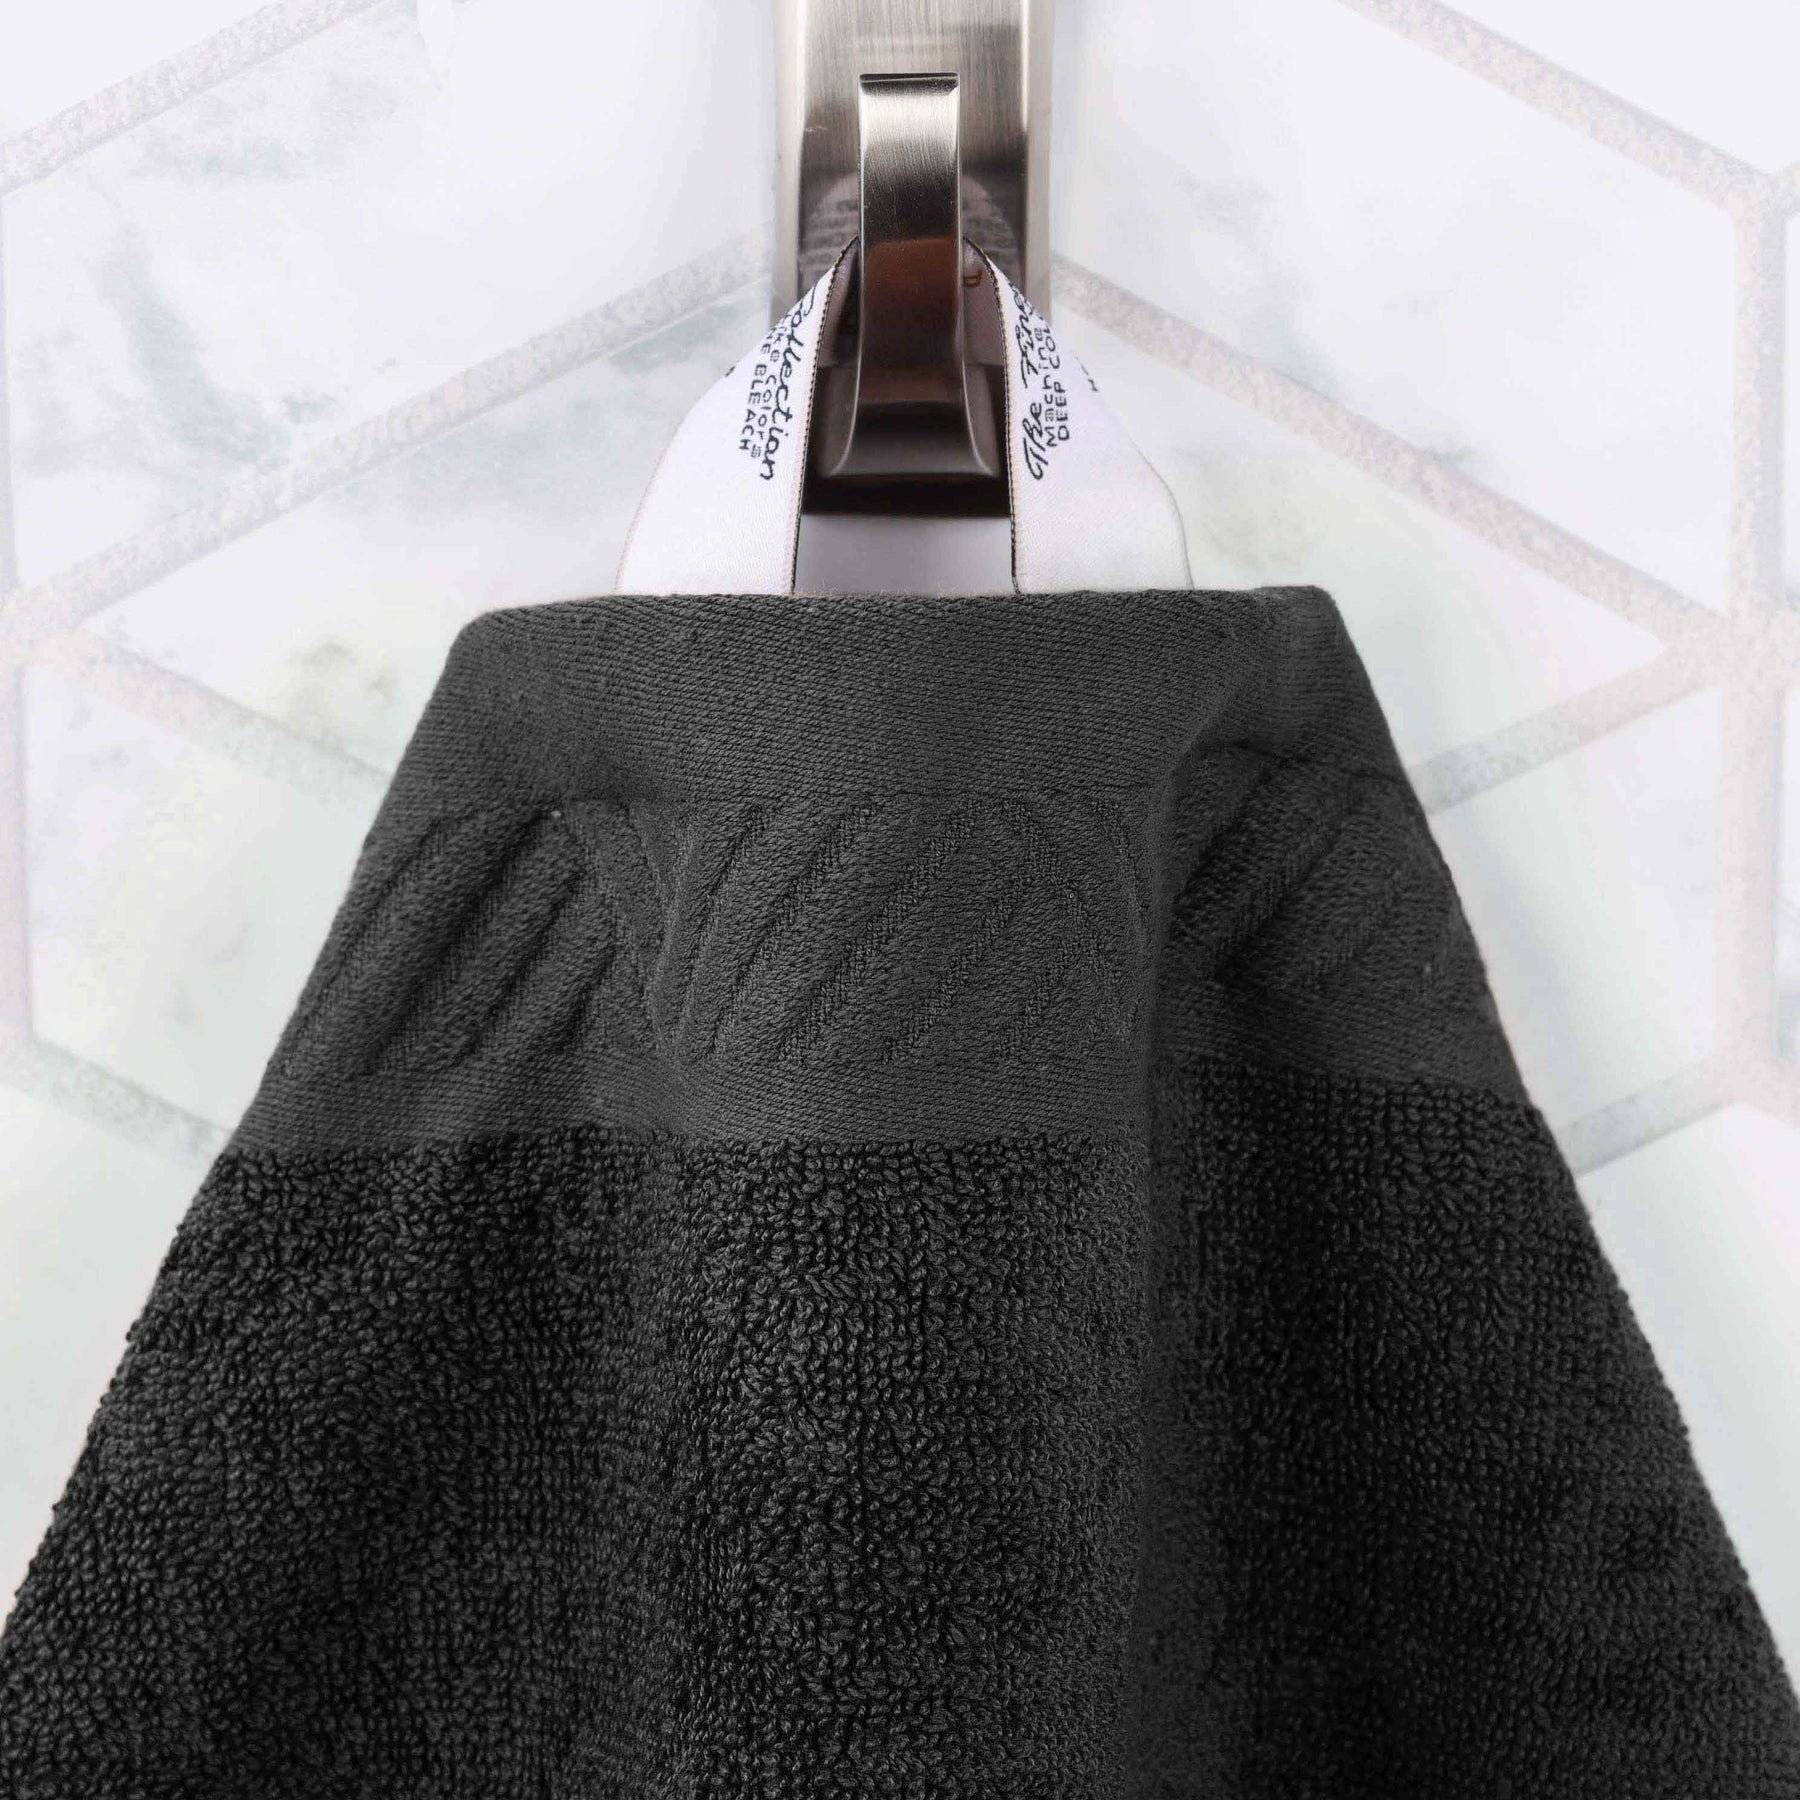 Basketweave Egyptian Cotton Jacquard and Solid Bath Towel Set of 4 - Black